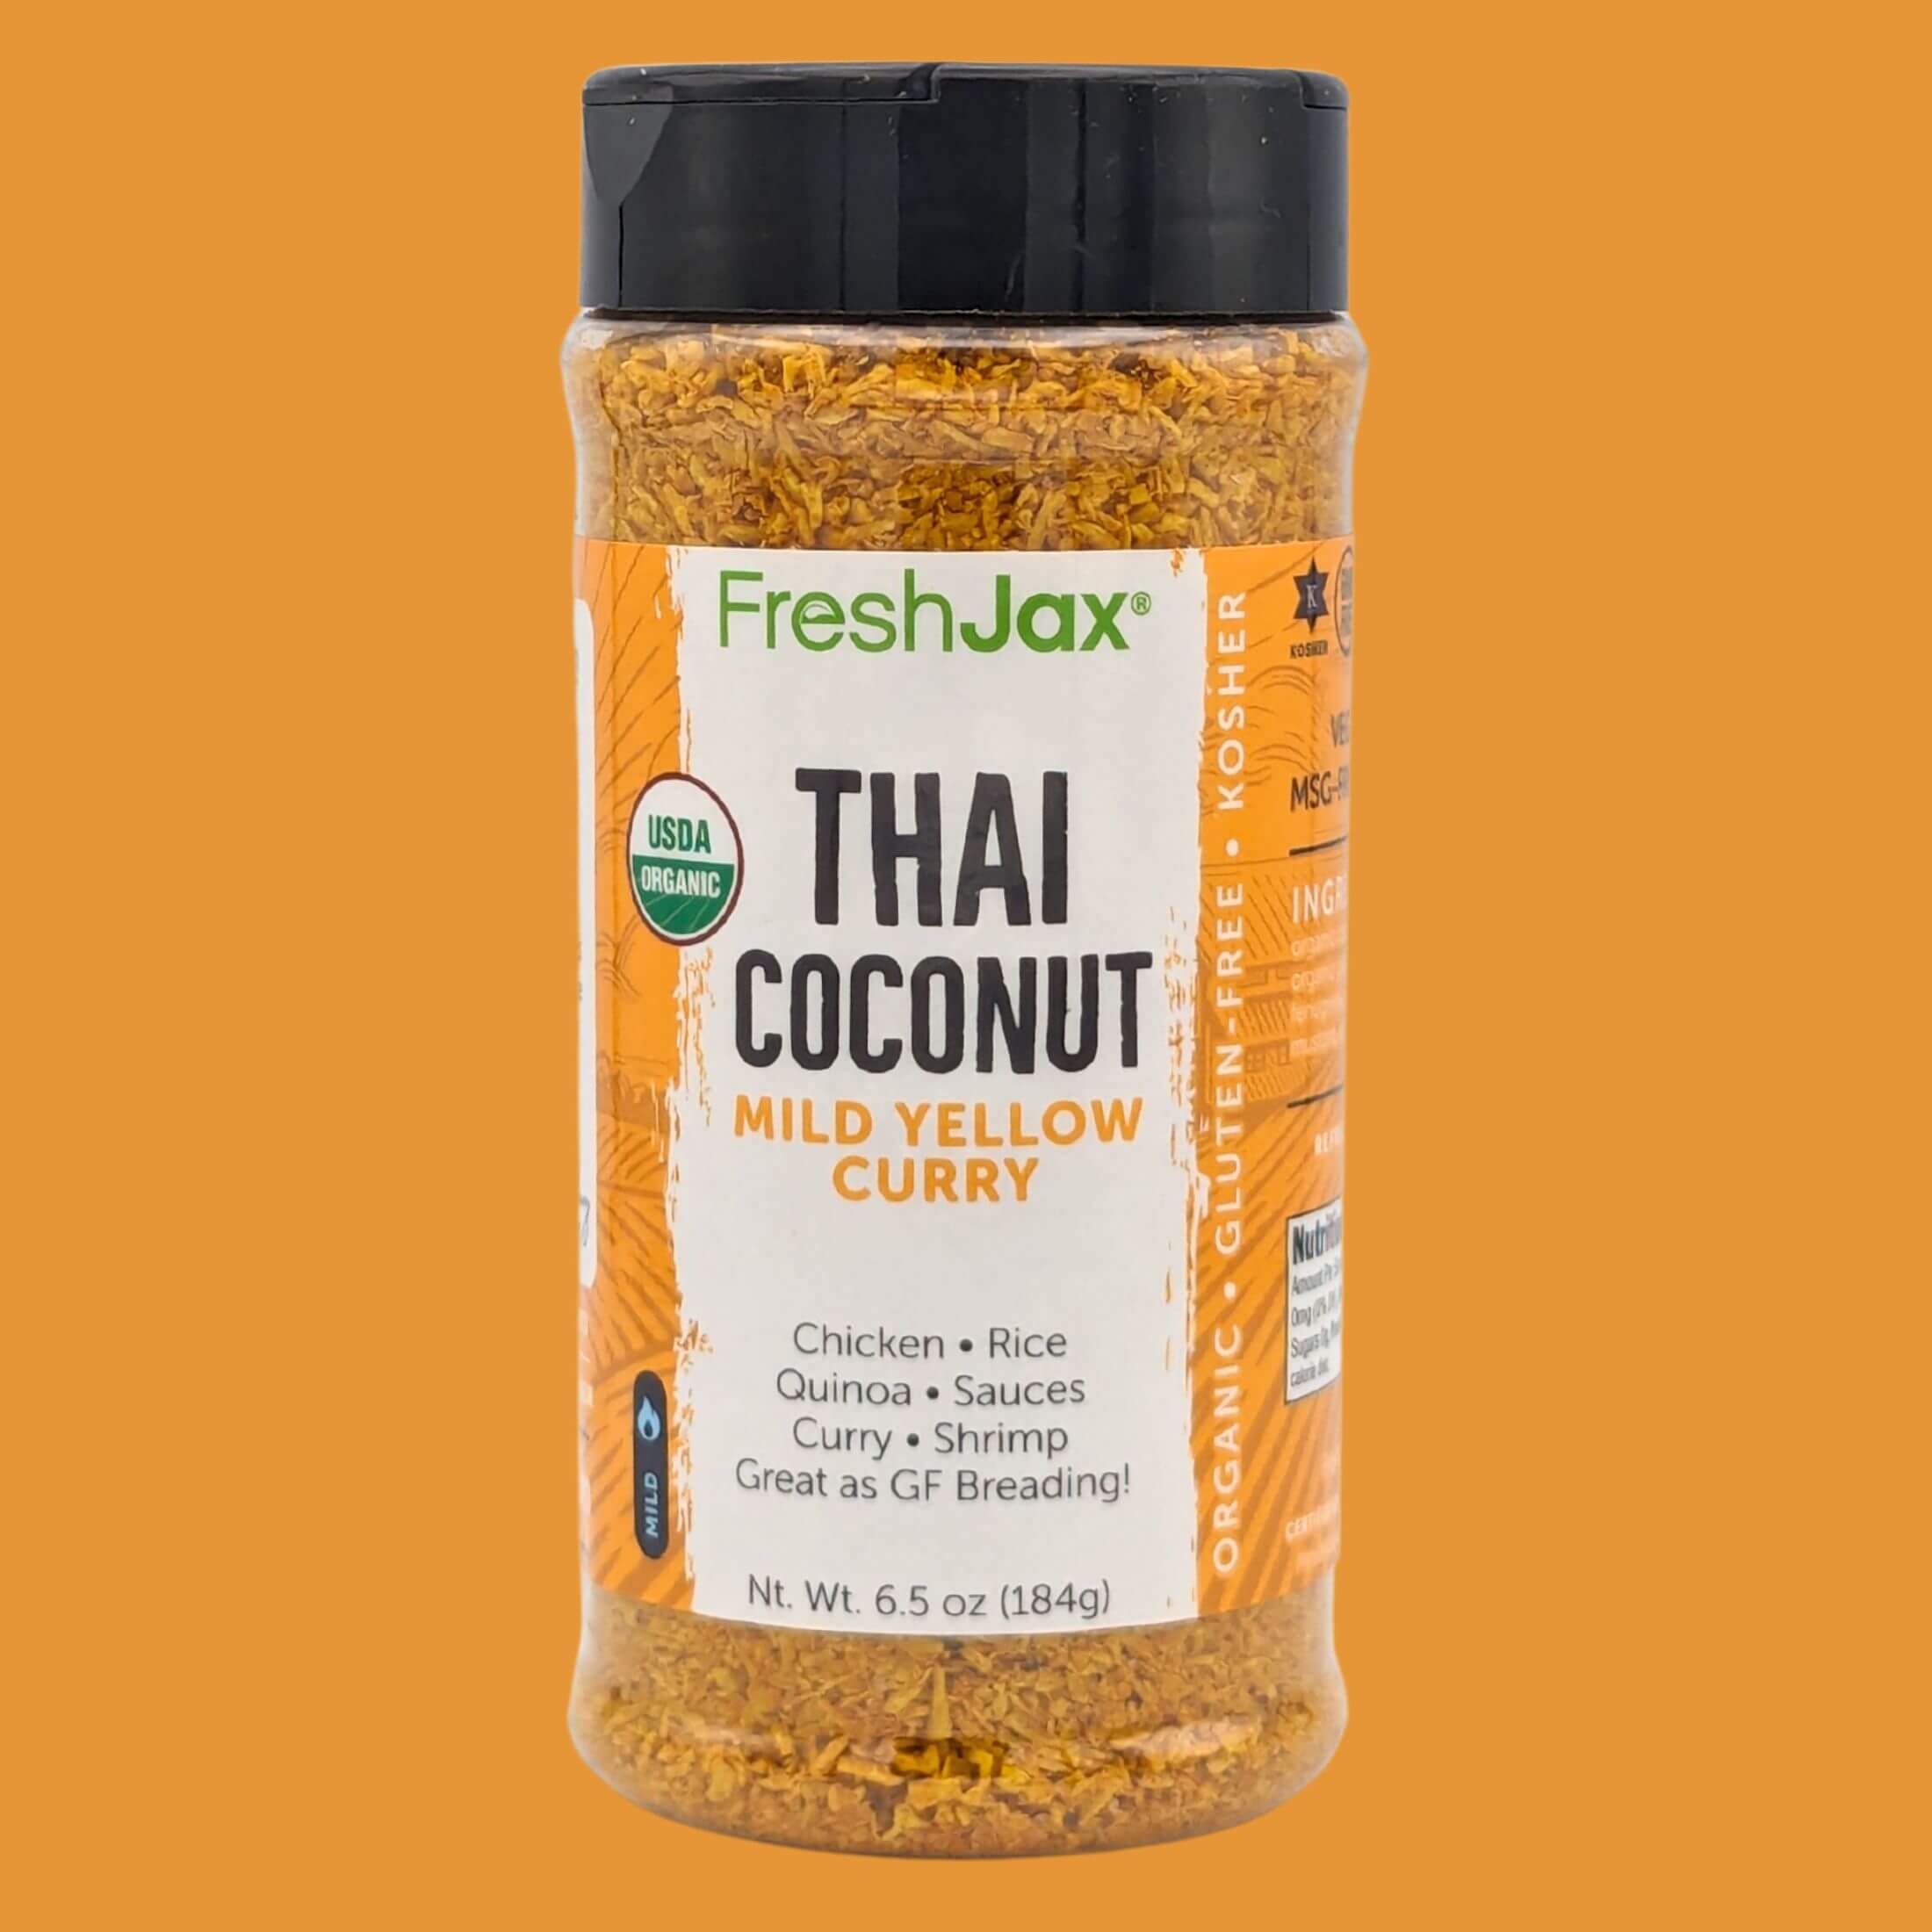 FreshJax Thai Coconut Mild Yellow Curry